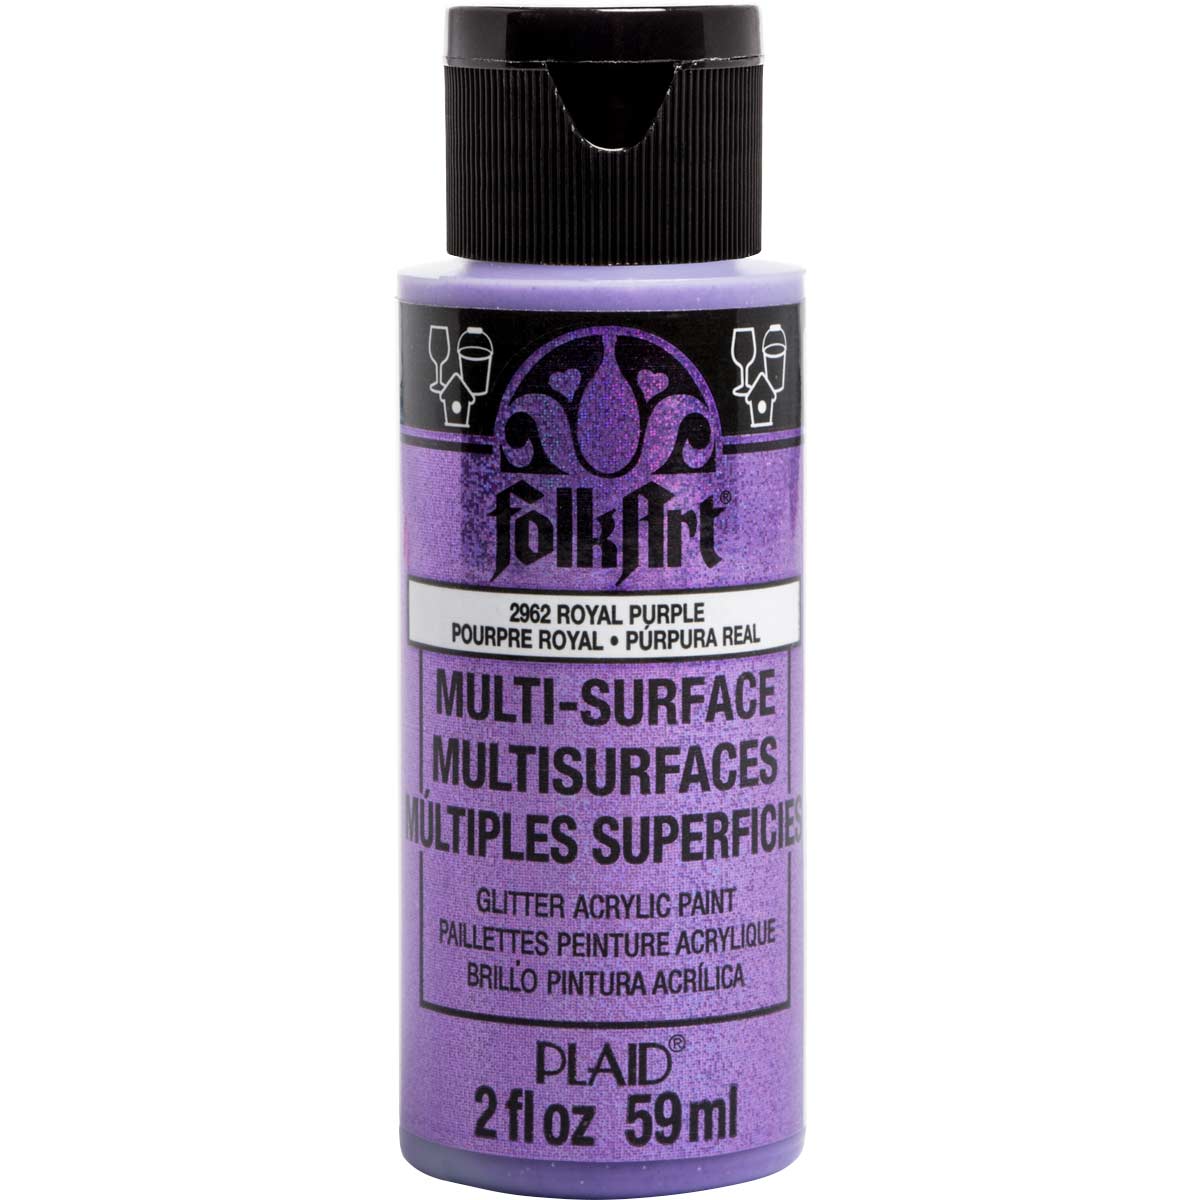 FolkArt ® Multi-Surface Glitter Acrylic Paints - Royal Purple, 2 oz. - 2962